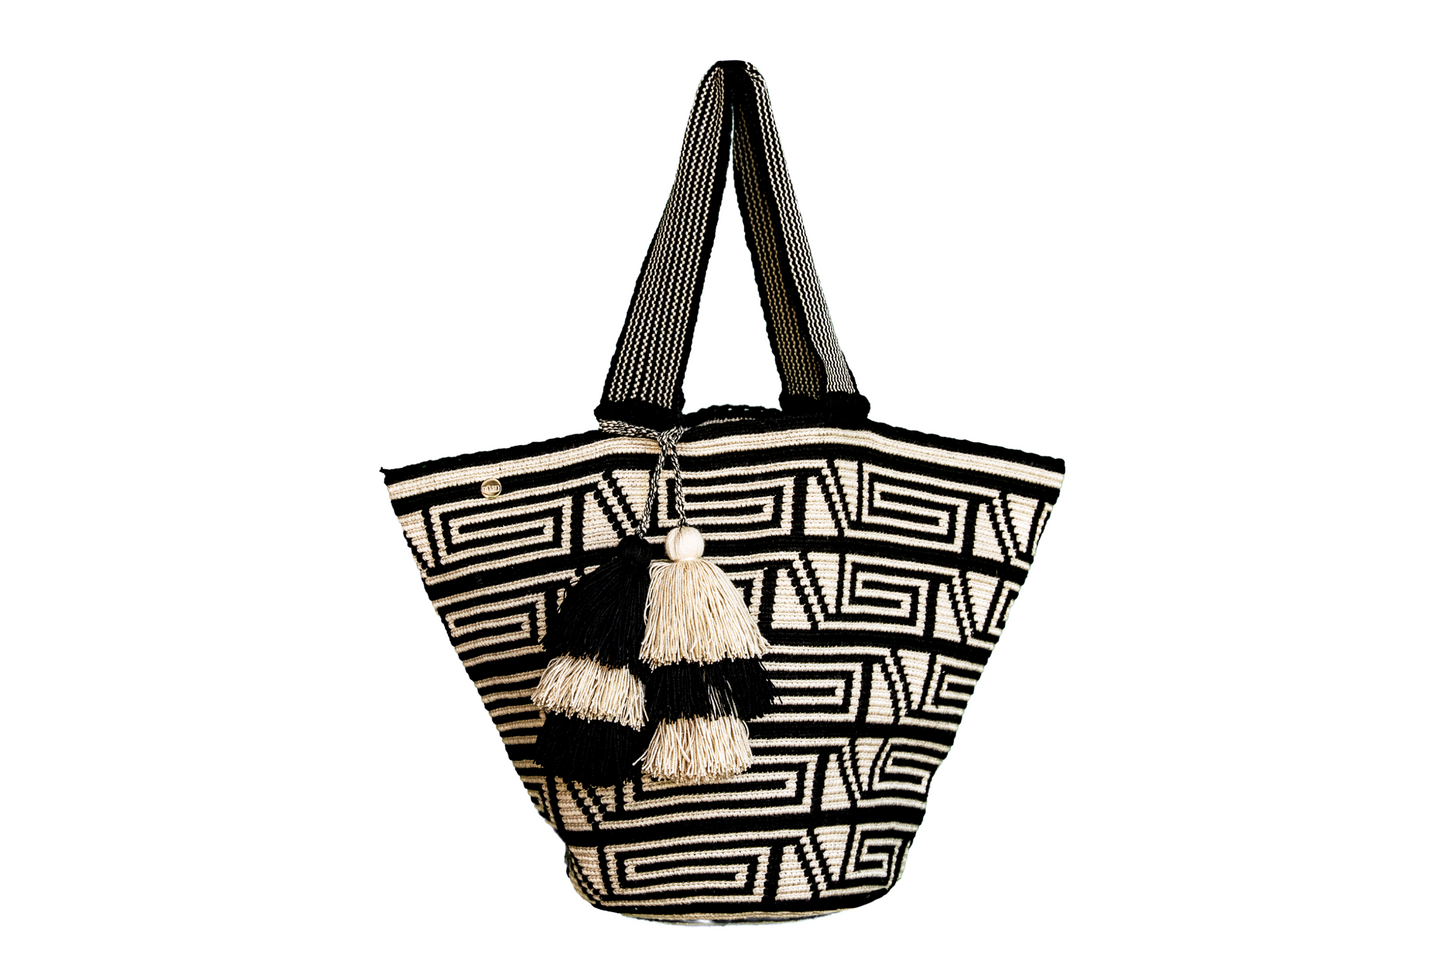 Handmade Black & White Beach Bag, with 6 black and white tassels.